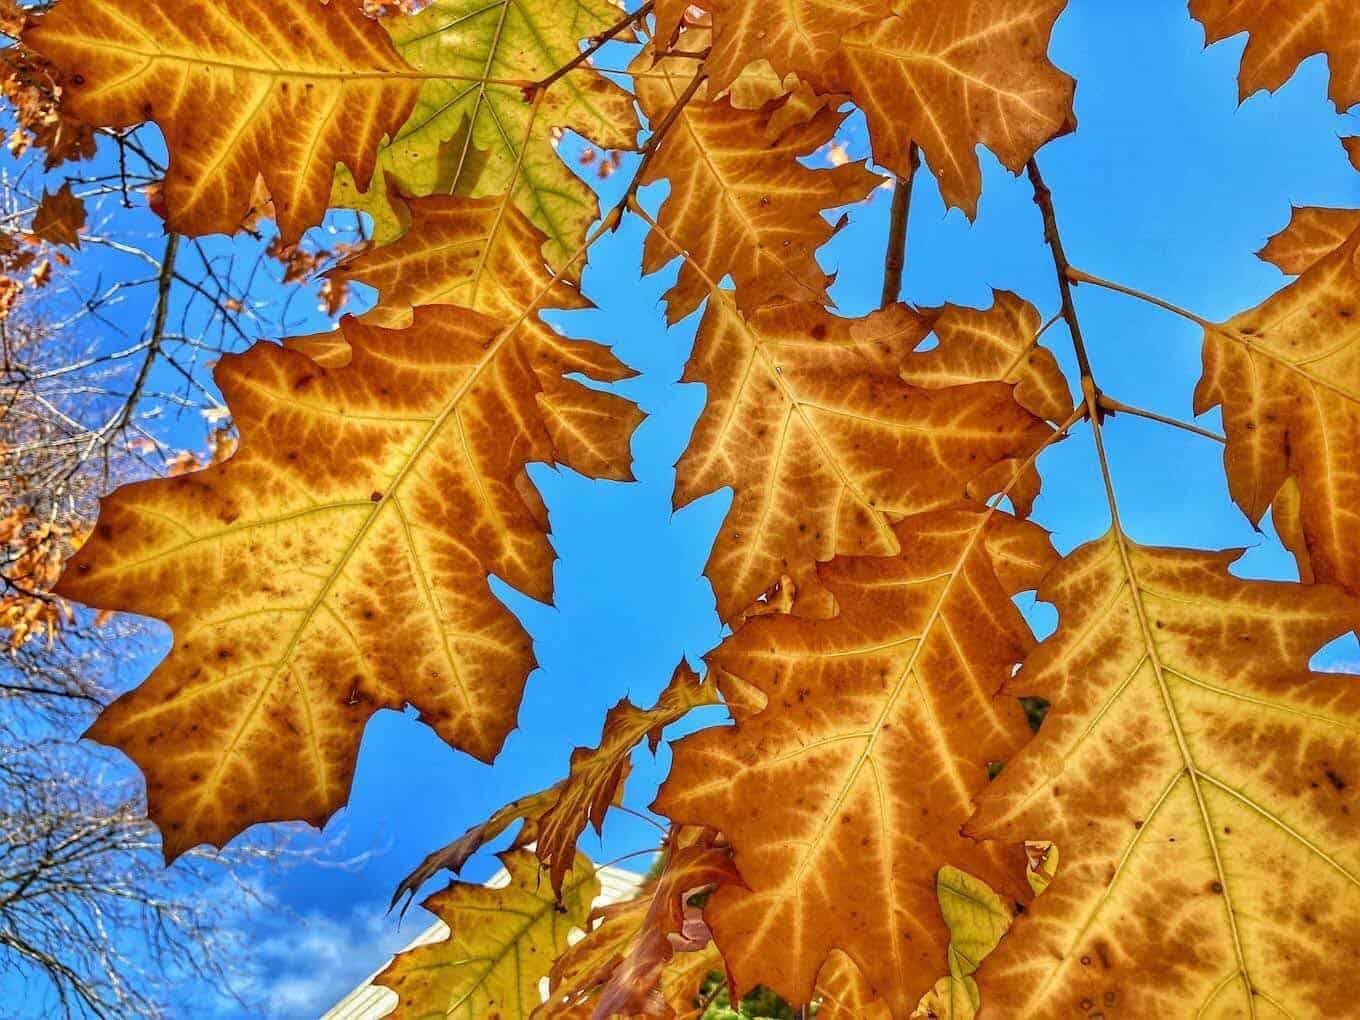 Oak leaves against a blue sky in the fall. 